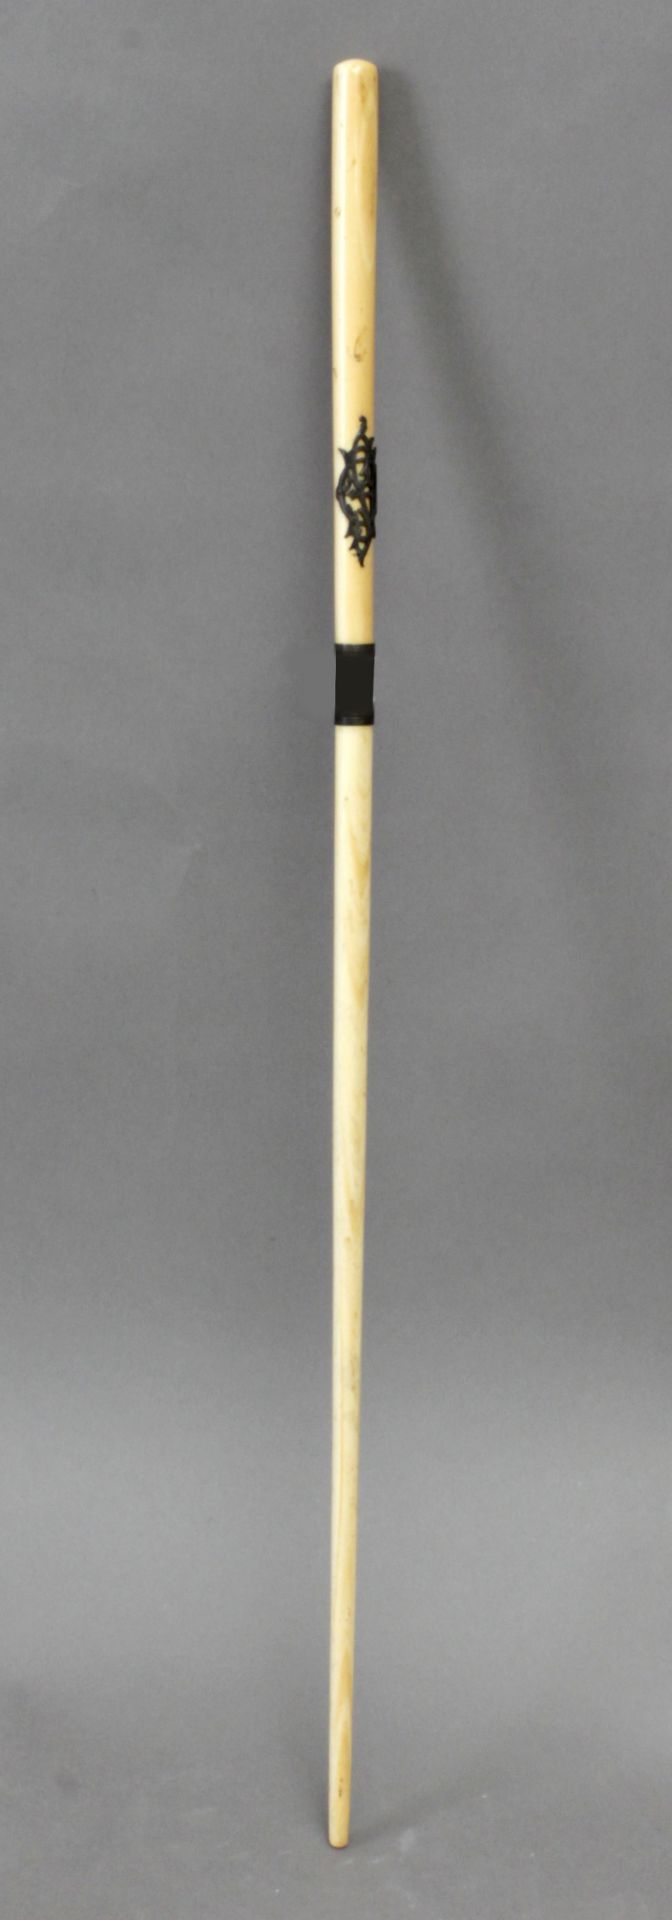 A 19th century English ivory baton